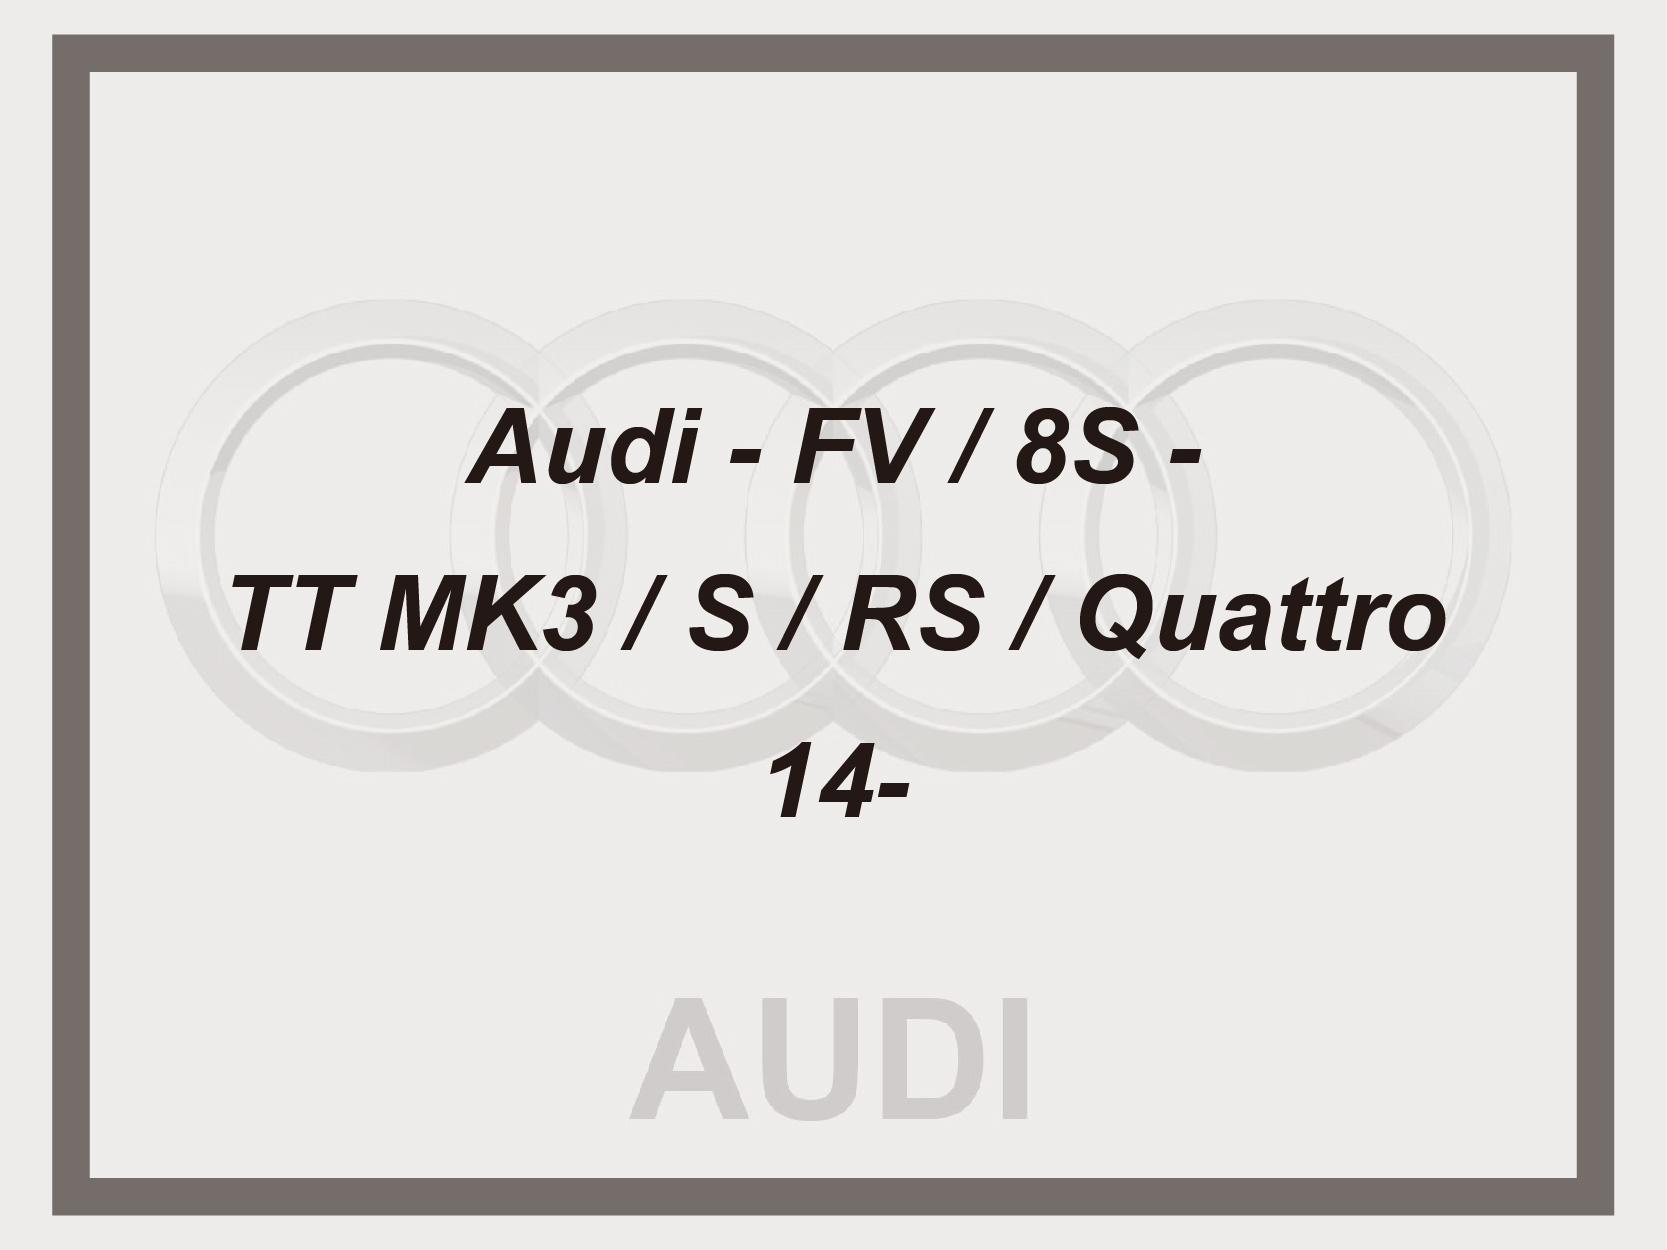 Audi - FV / 8S - TT MK3 / S / RS / Quattro - 14-